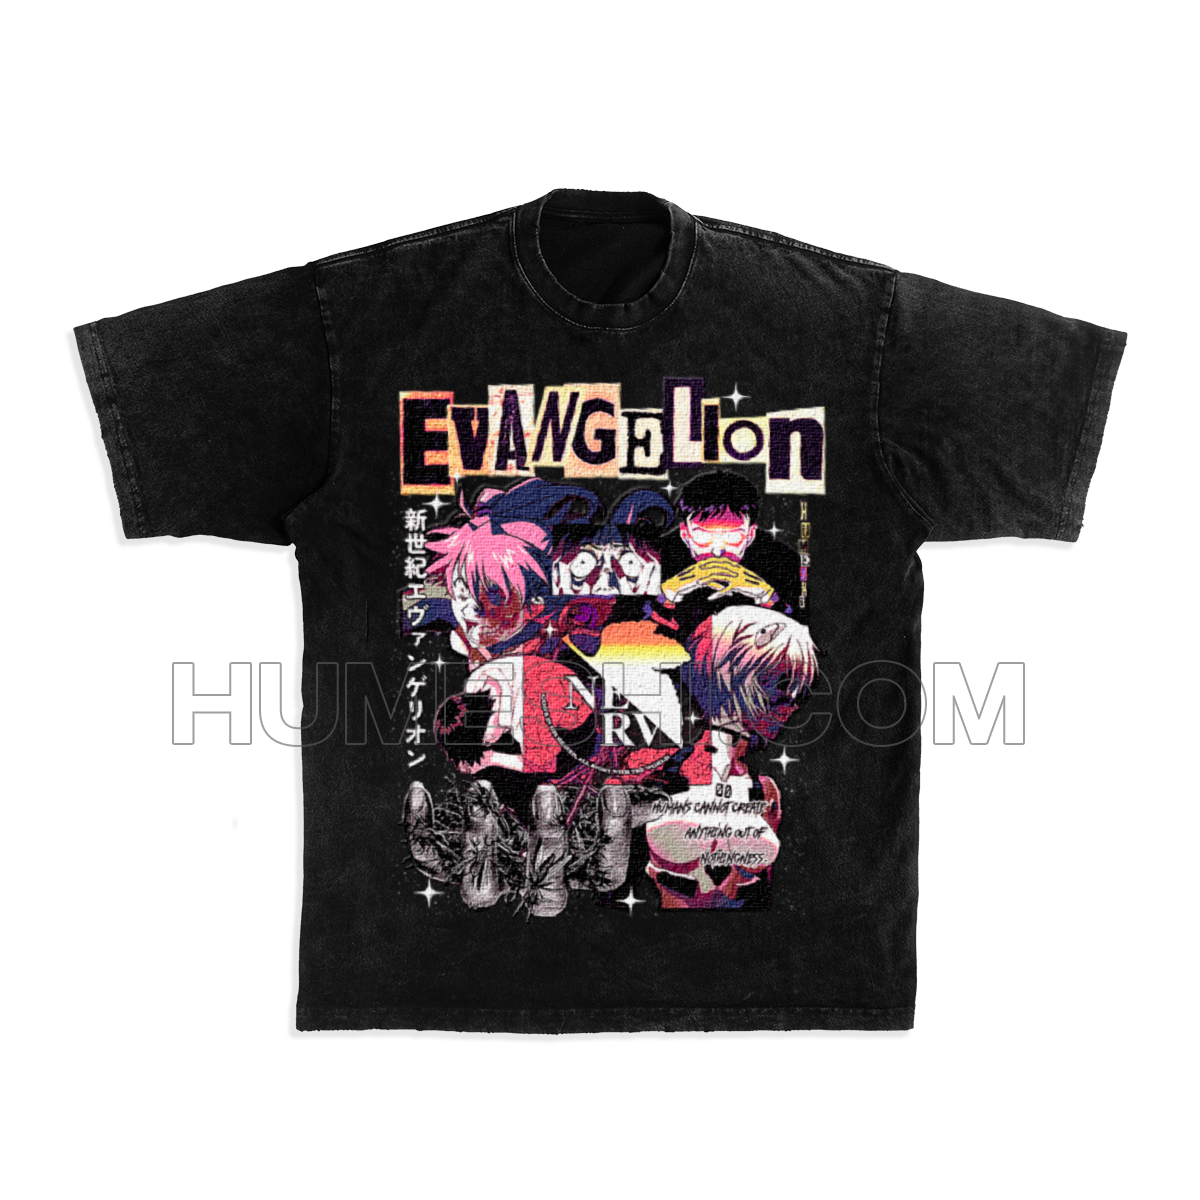 Neon Genesis Evangelion Horror HM-X.02 Shirt